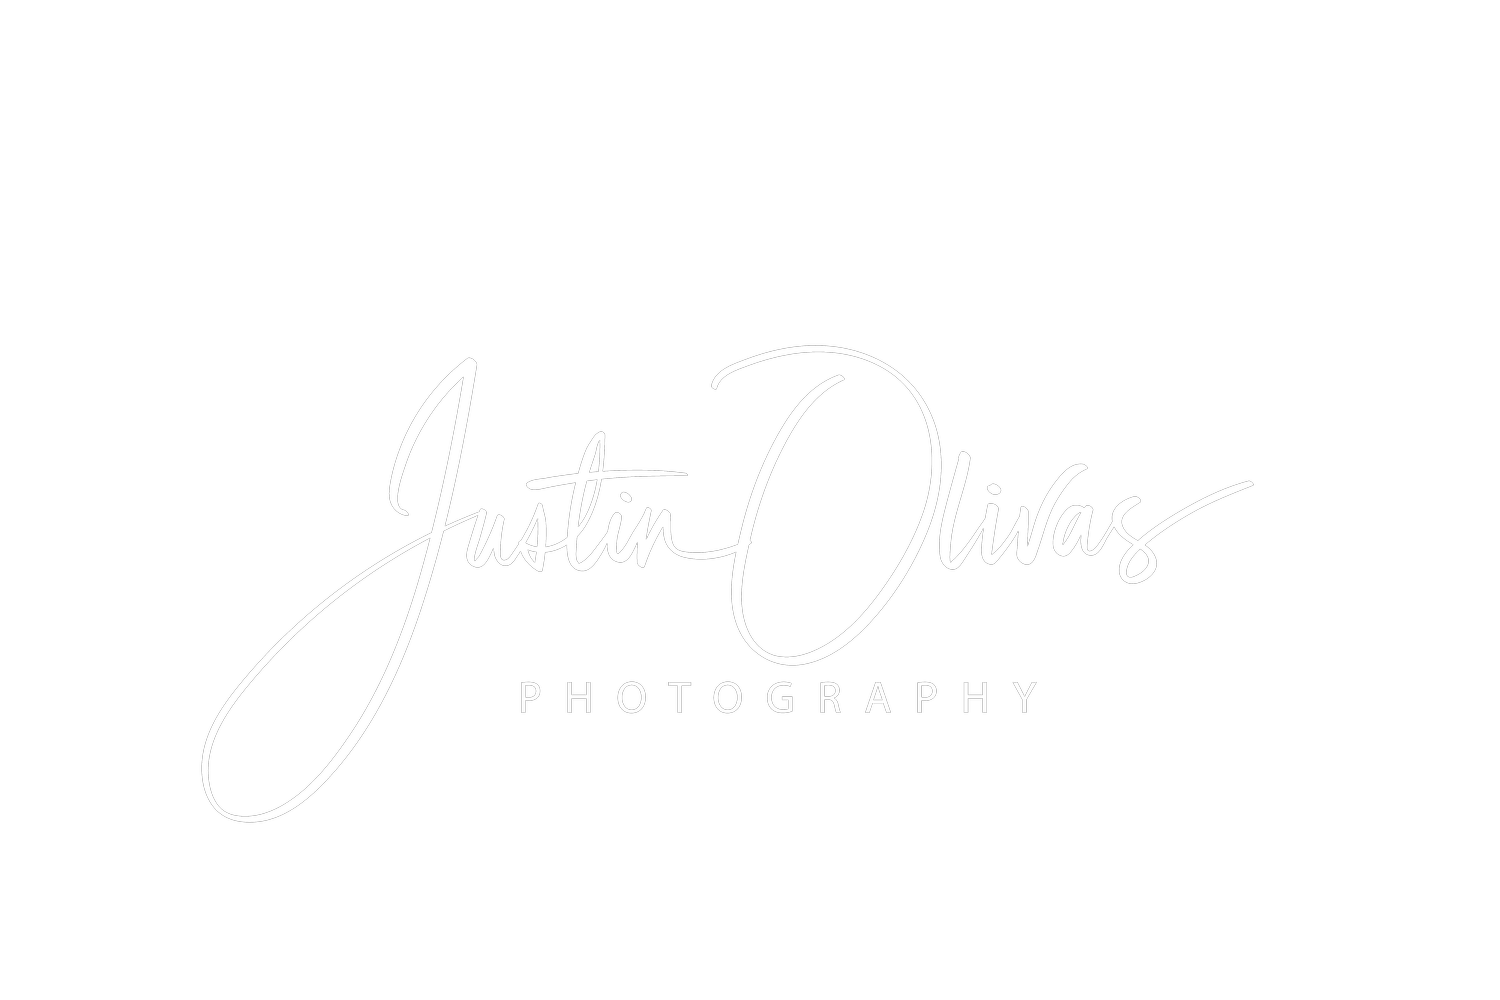  JUSTIN OLIVAS PHOTOGRAPHY